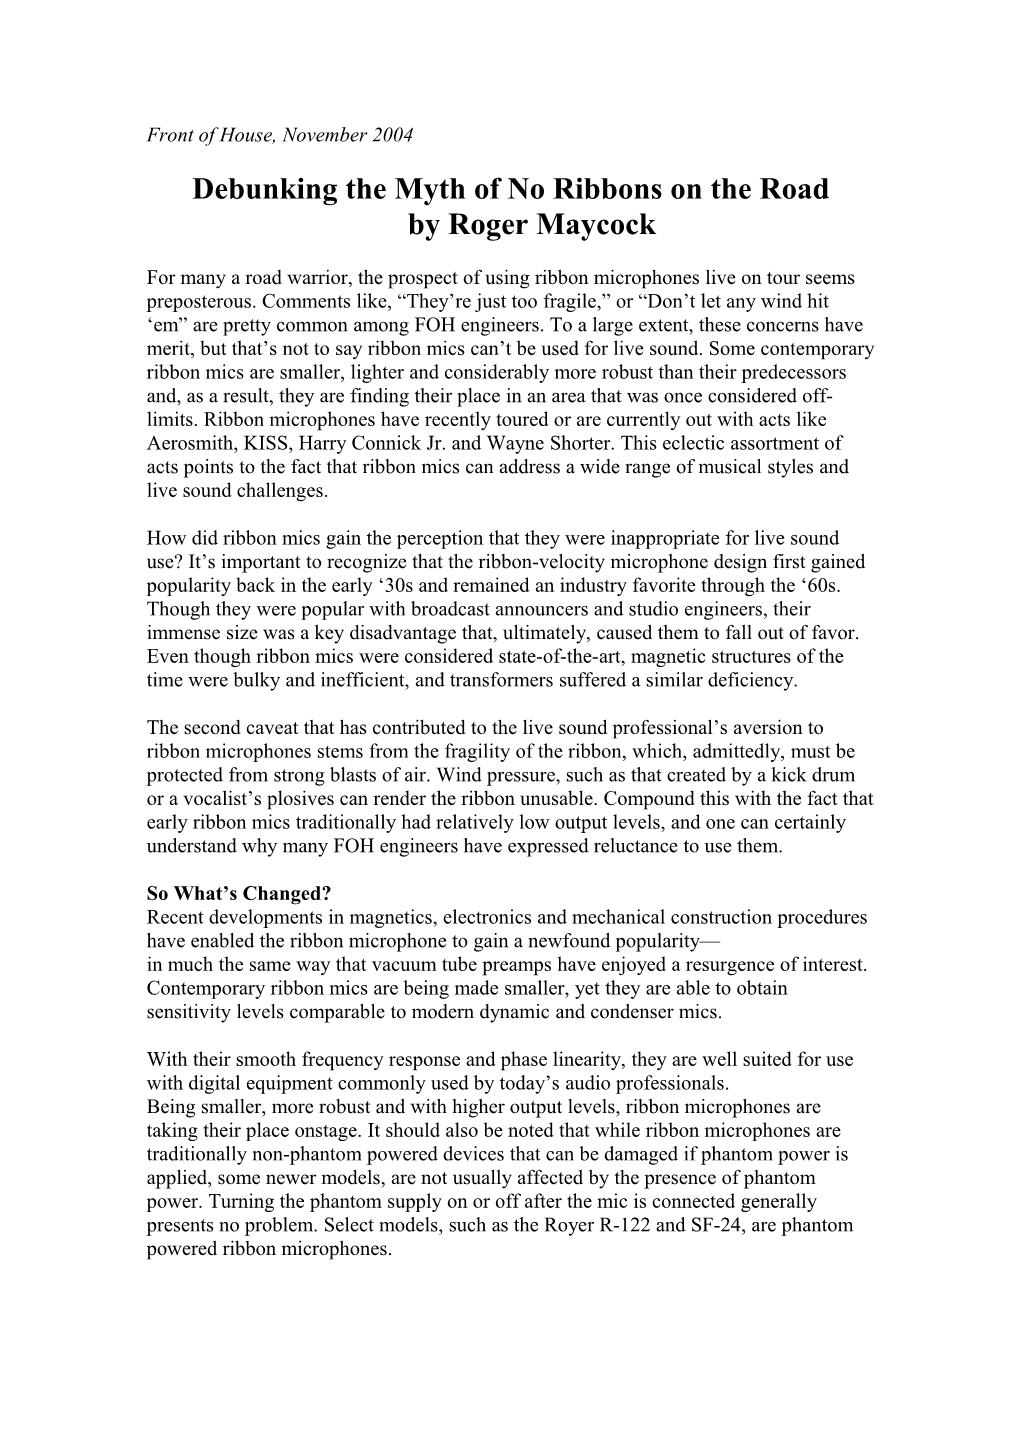 Debunking the Myth of No Ribbons on the Roadby Roger Maycock